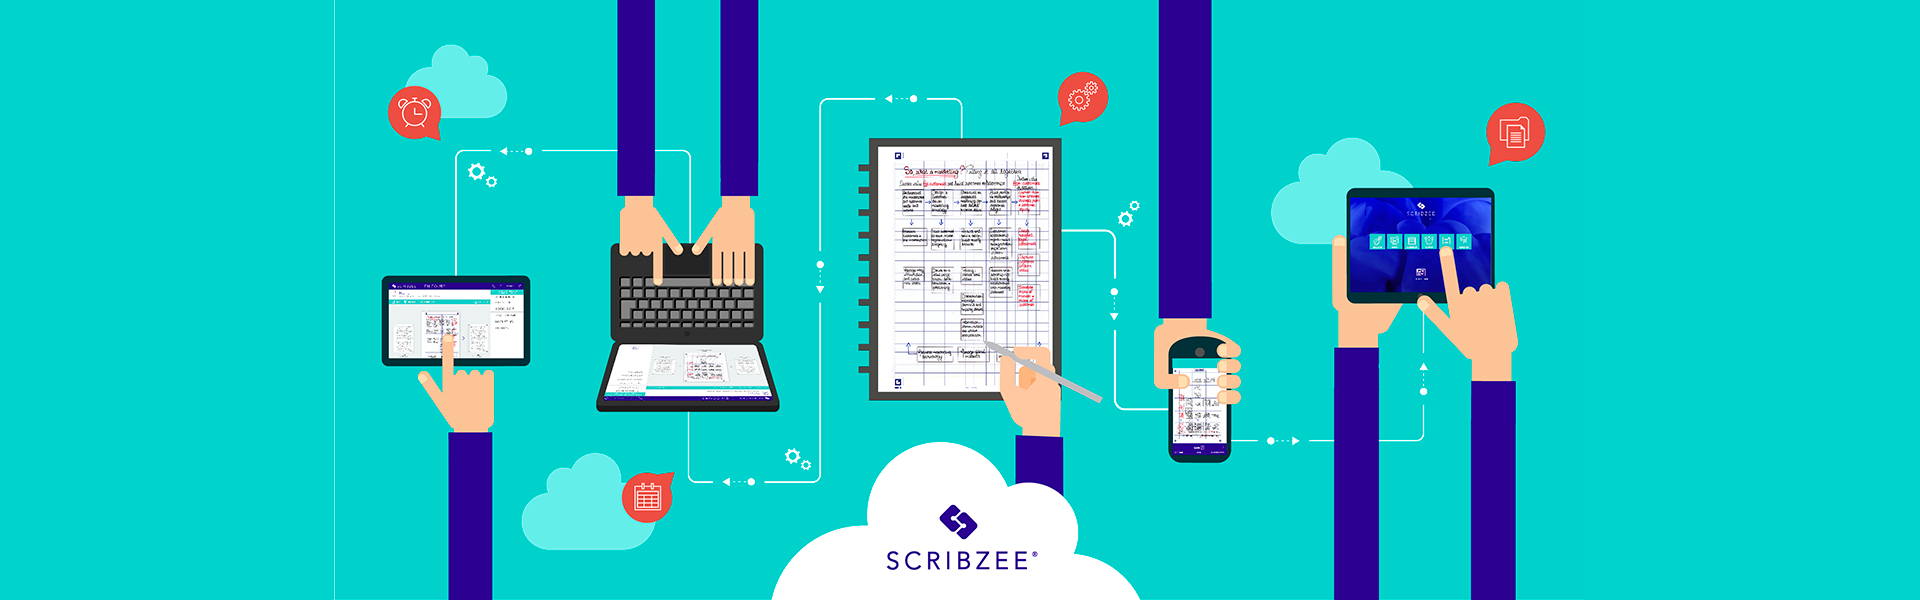 Application SCRIBZEE, gestion des notes manuscrites